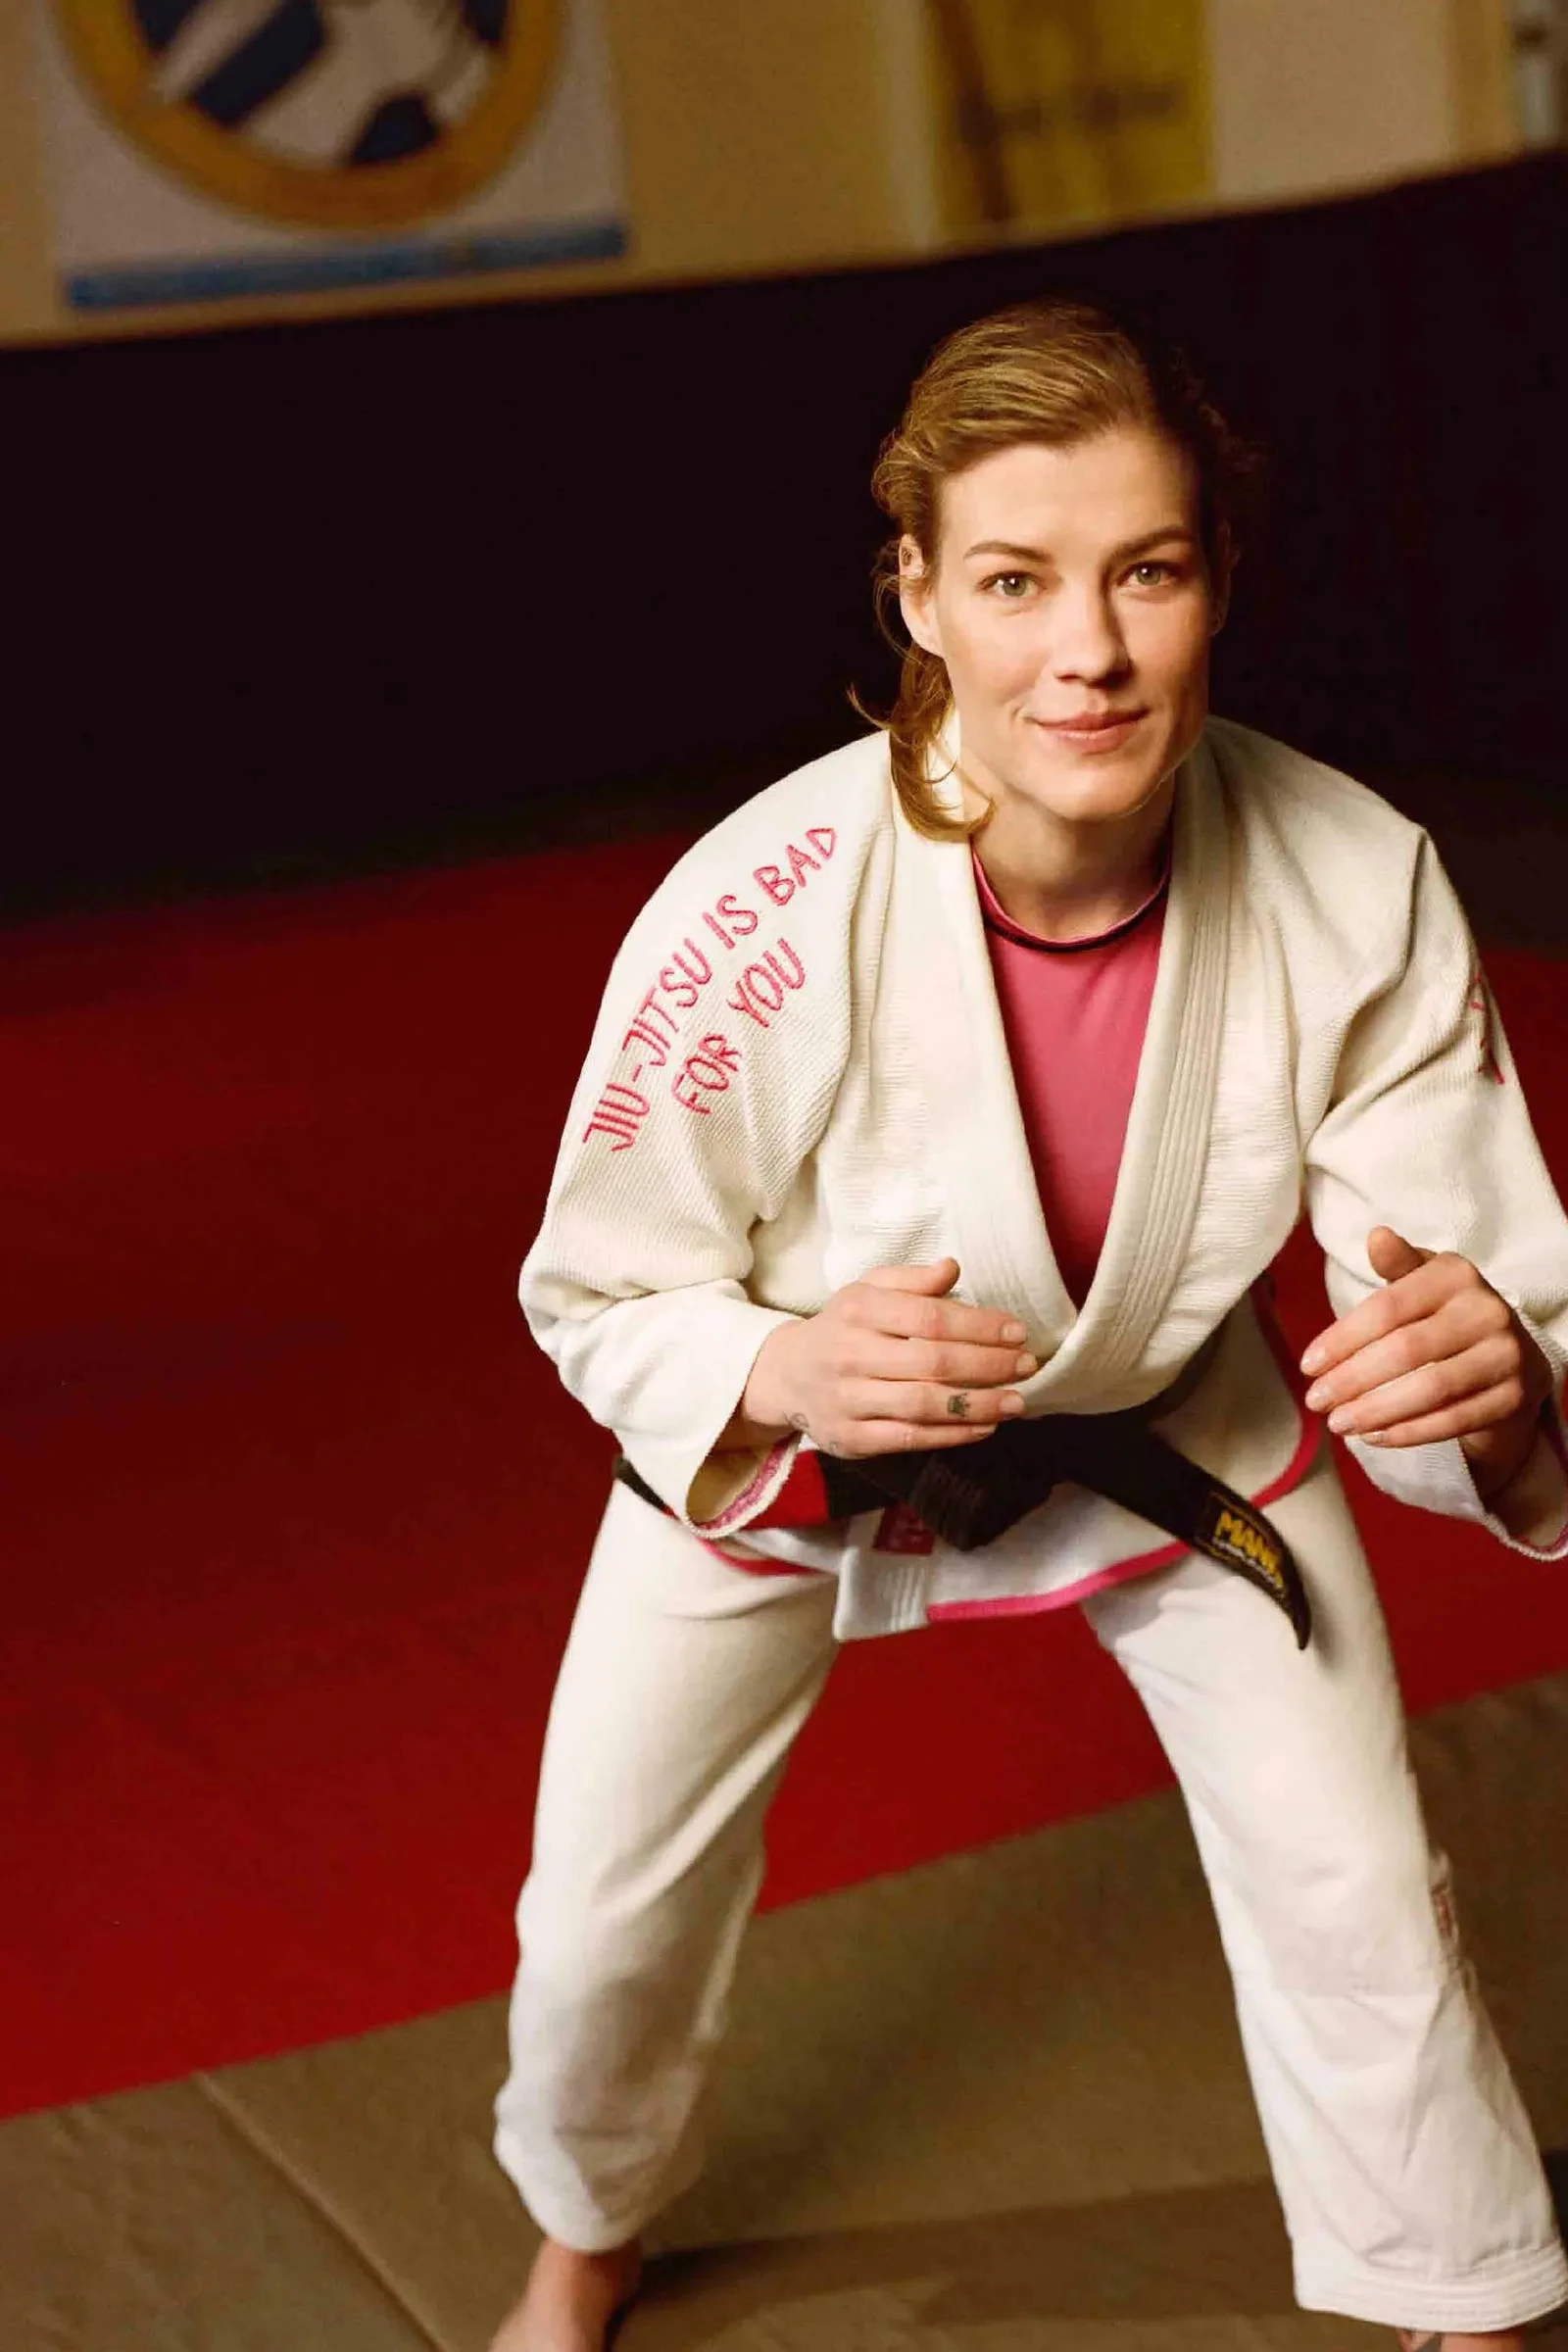 Bohdana Golub, a jiu-jitsu master (Europe 2022 champion) and military volunteer